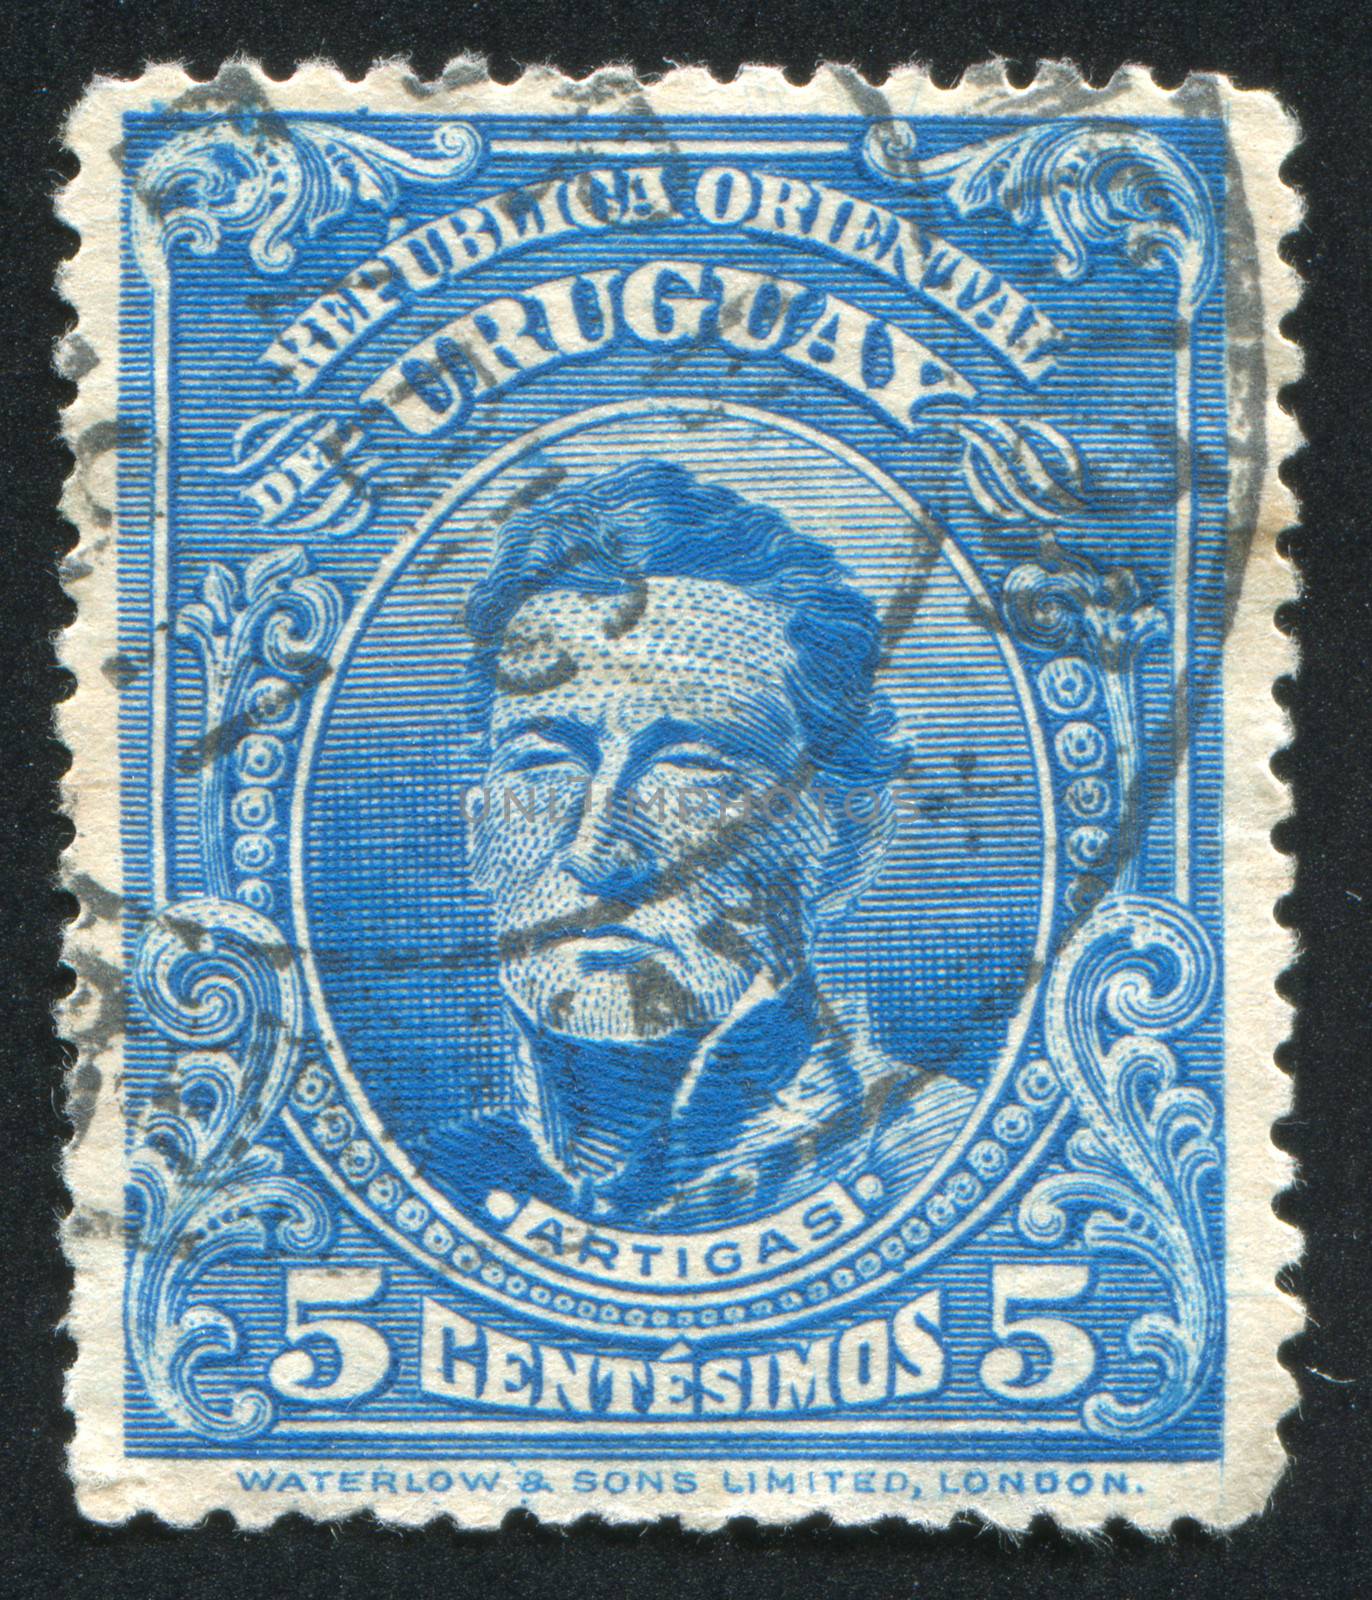 URUGUAY - CIRCA 1910: stamp printed by Uruguay, shows Jose Gervasio Artigas, circa 1910